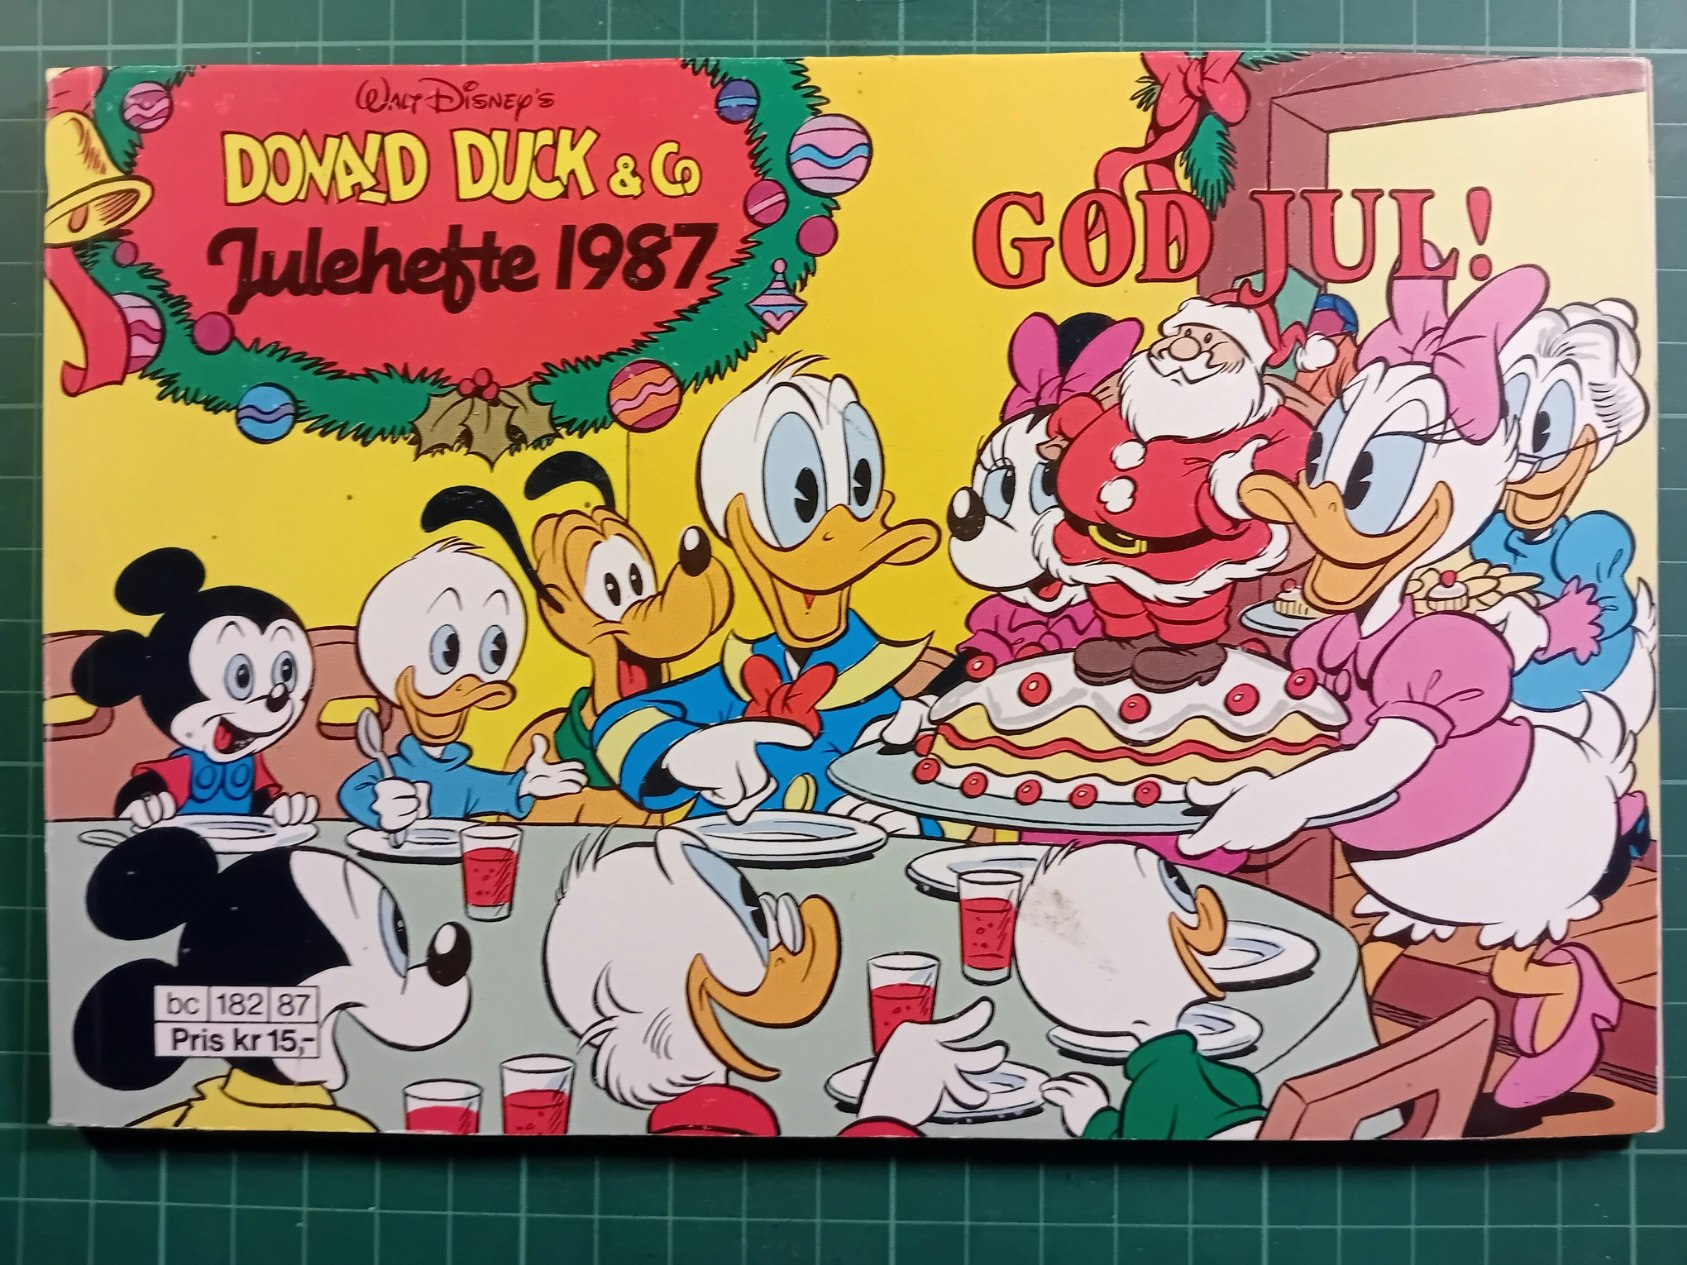 Julehefte Donald Duck & Co 1987